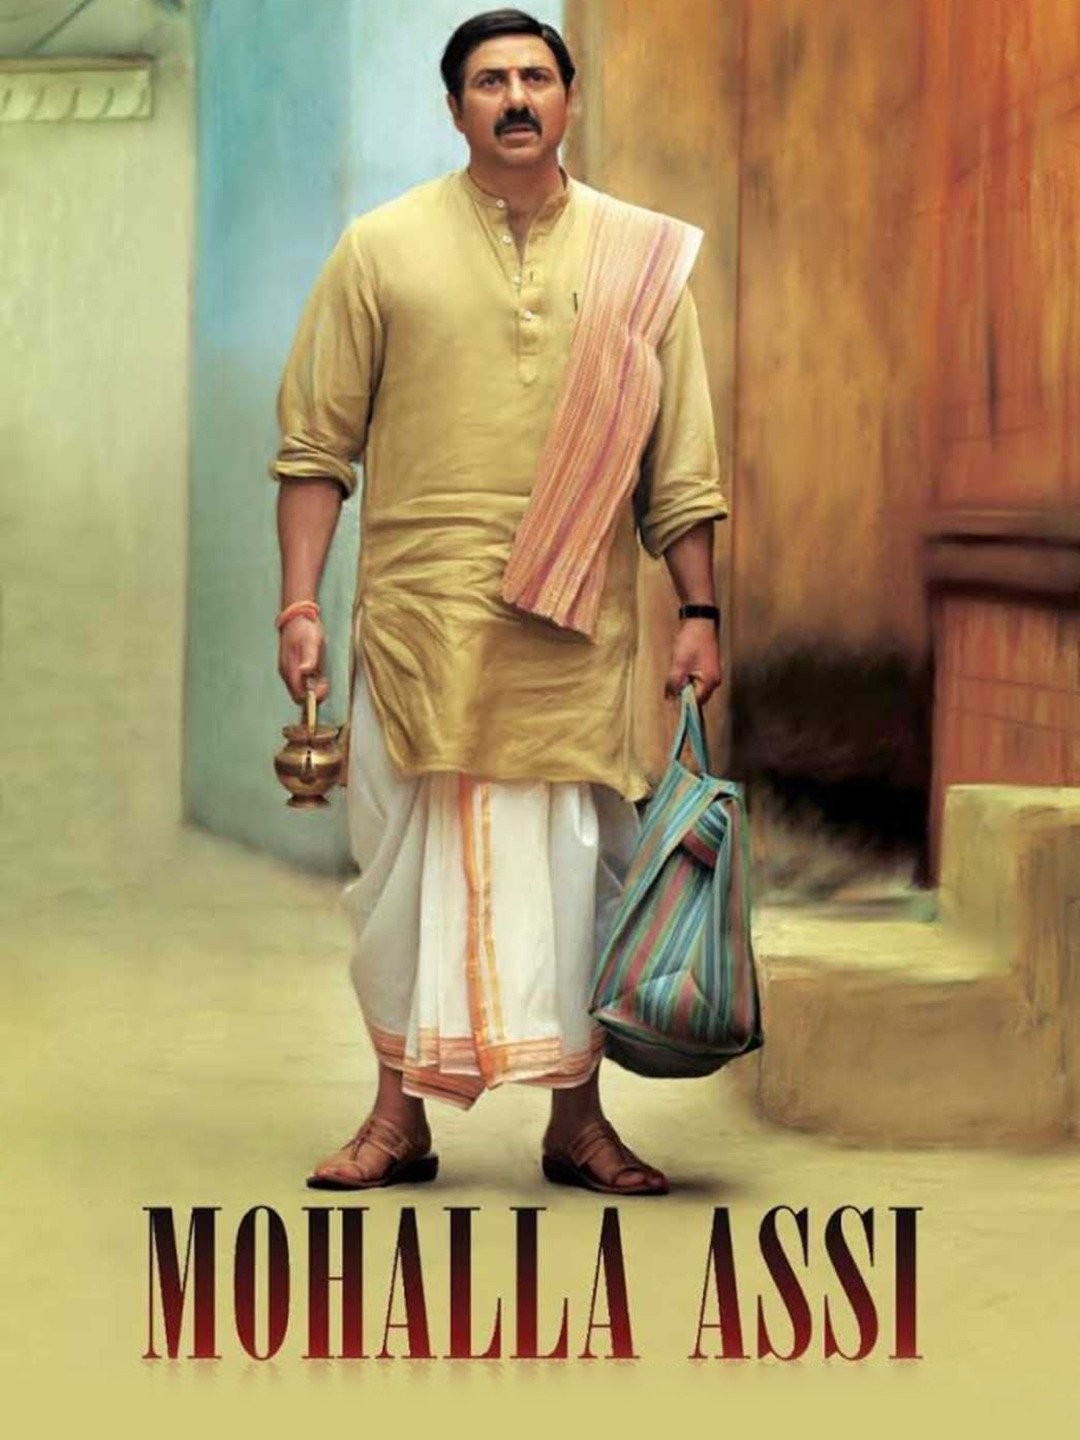 Best of Mohalla assi full movie